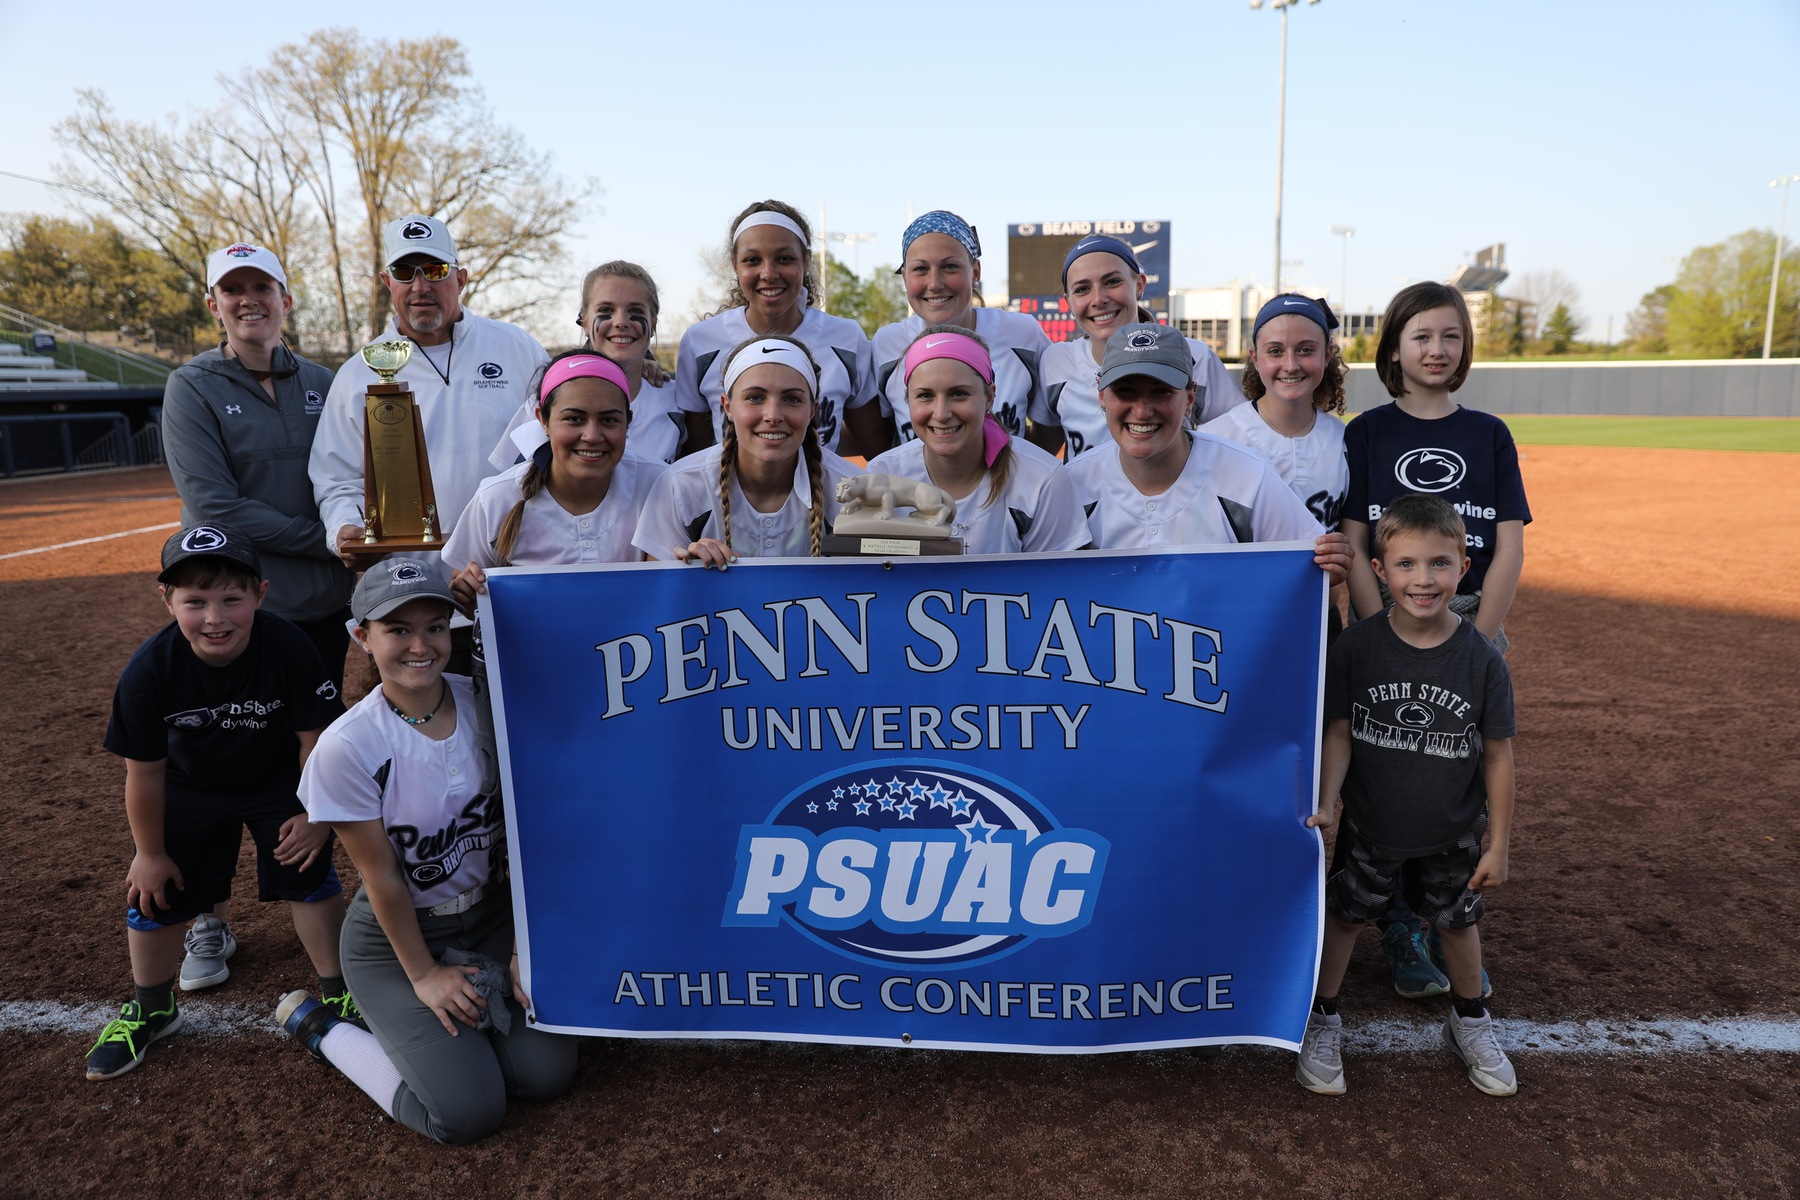 2018 PSUAC Softball Champions Penn State Brandywine.